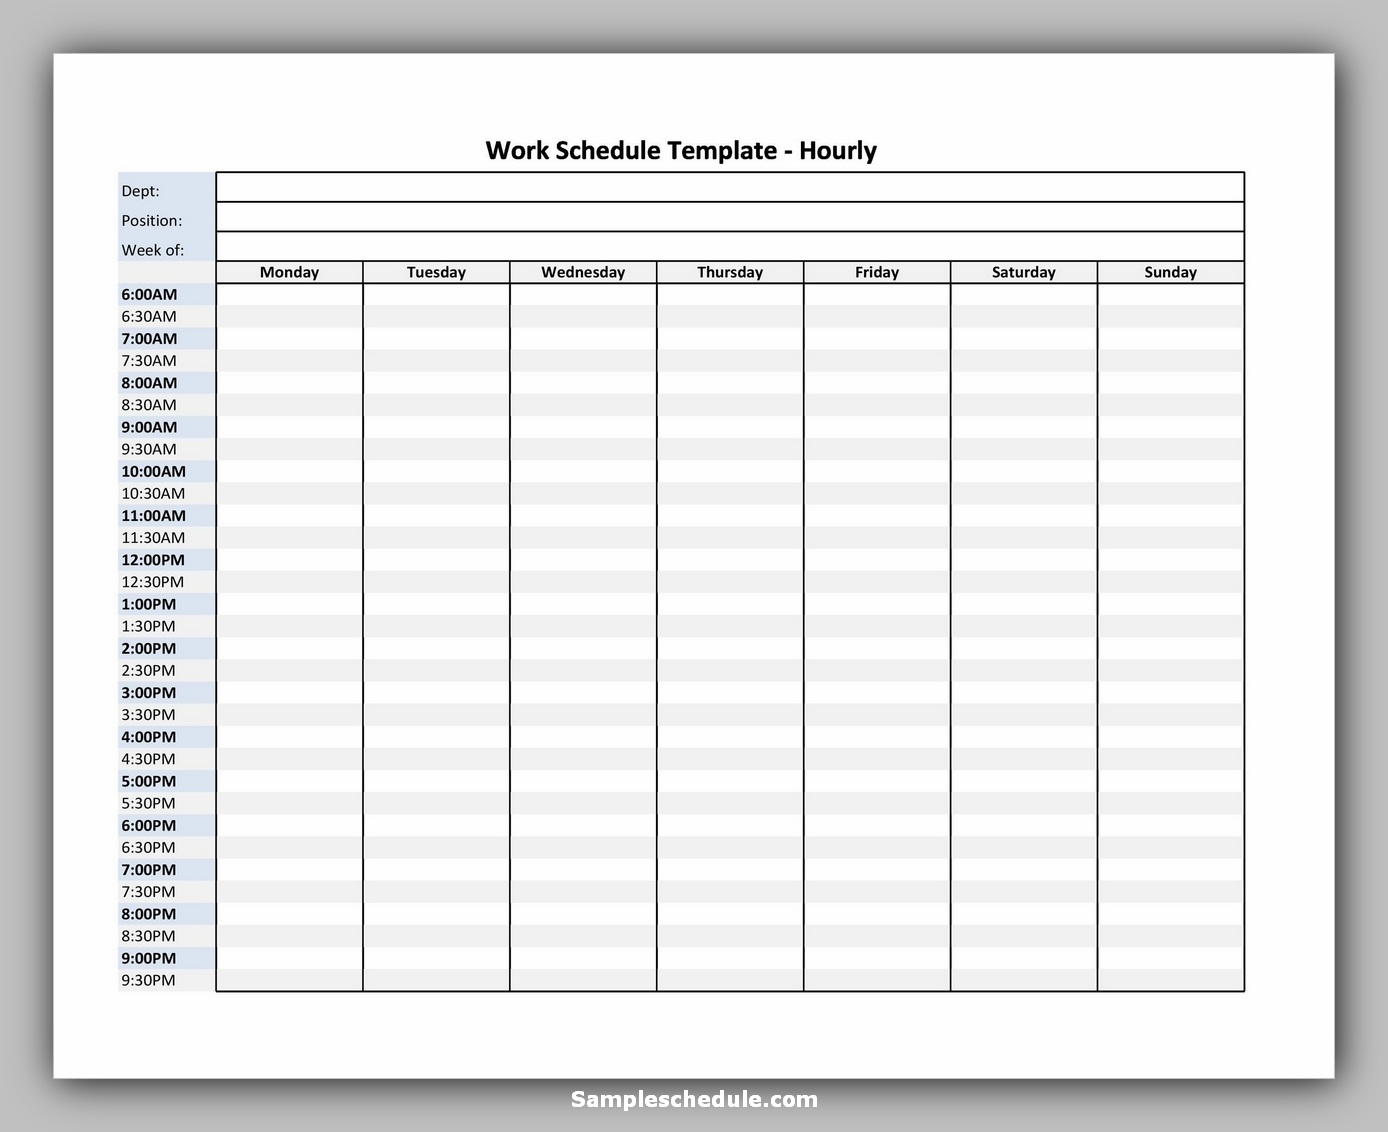 weekly working hours schedule template